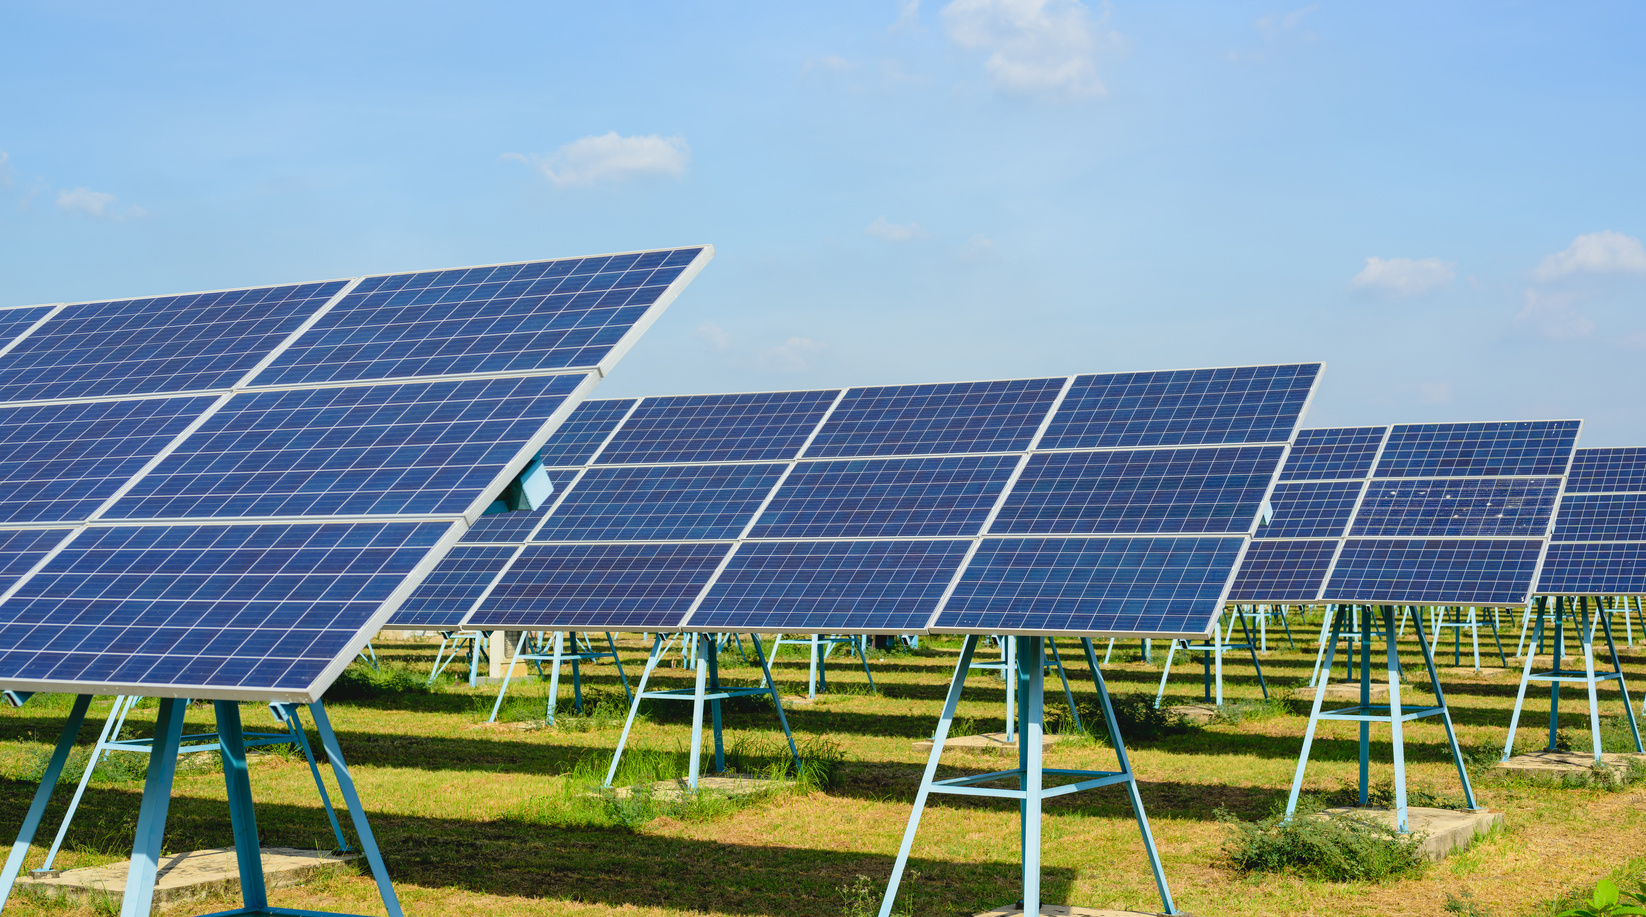 Photovoltaic solar panels with sun at solar cell farm field